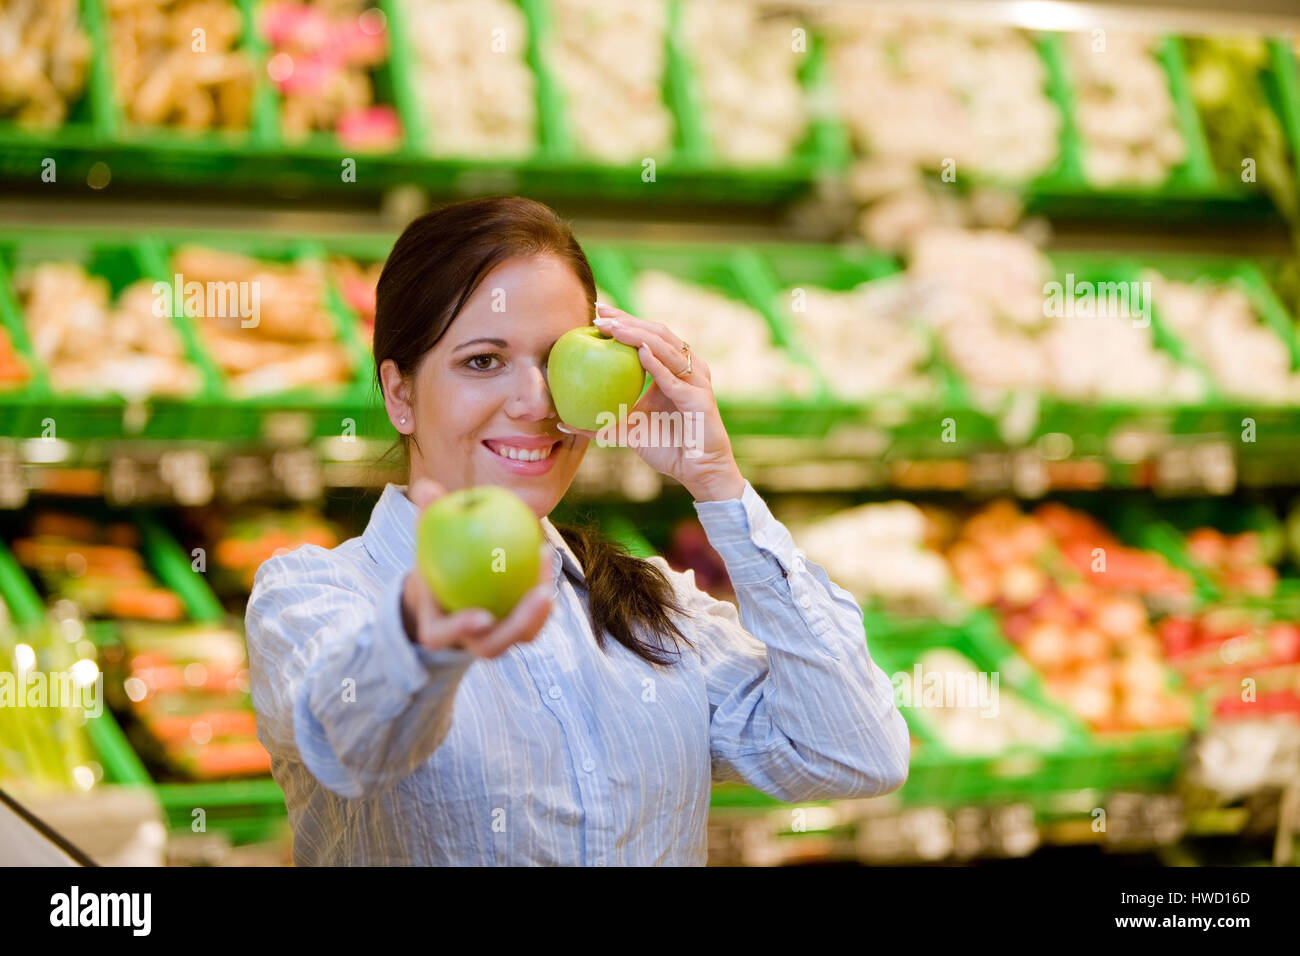 Woman goes for shopping at the supermarket, Frau geht Einkaufen im Supermarkt Stock Photo